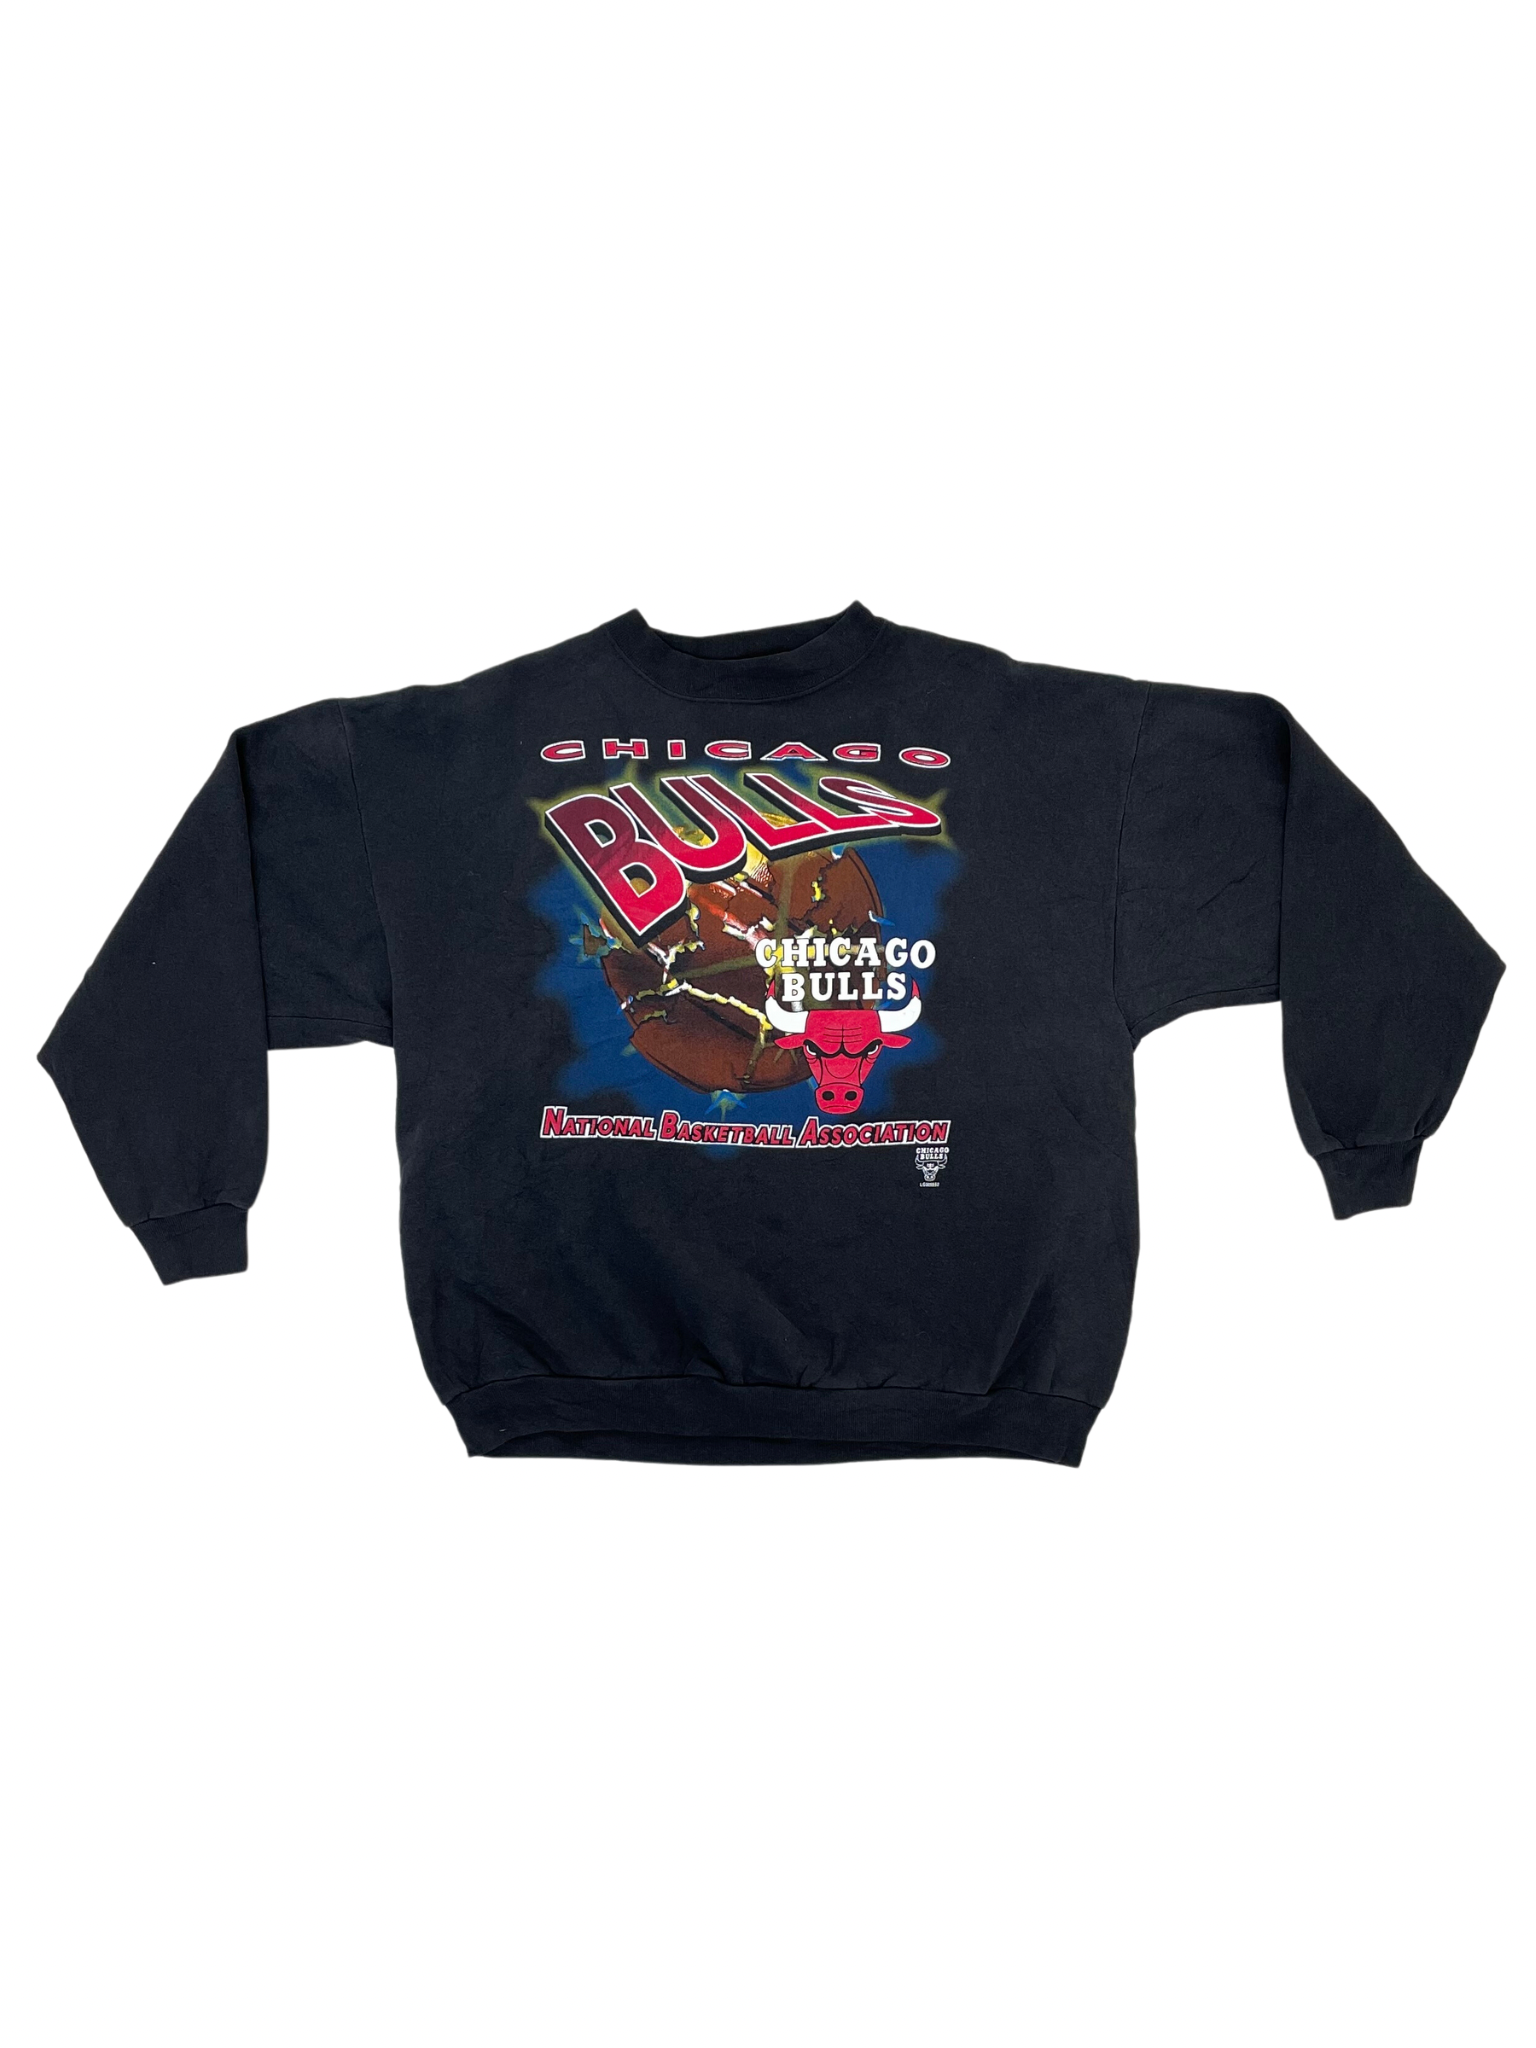 Vintage Chicago Bulls sweatshirt